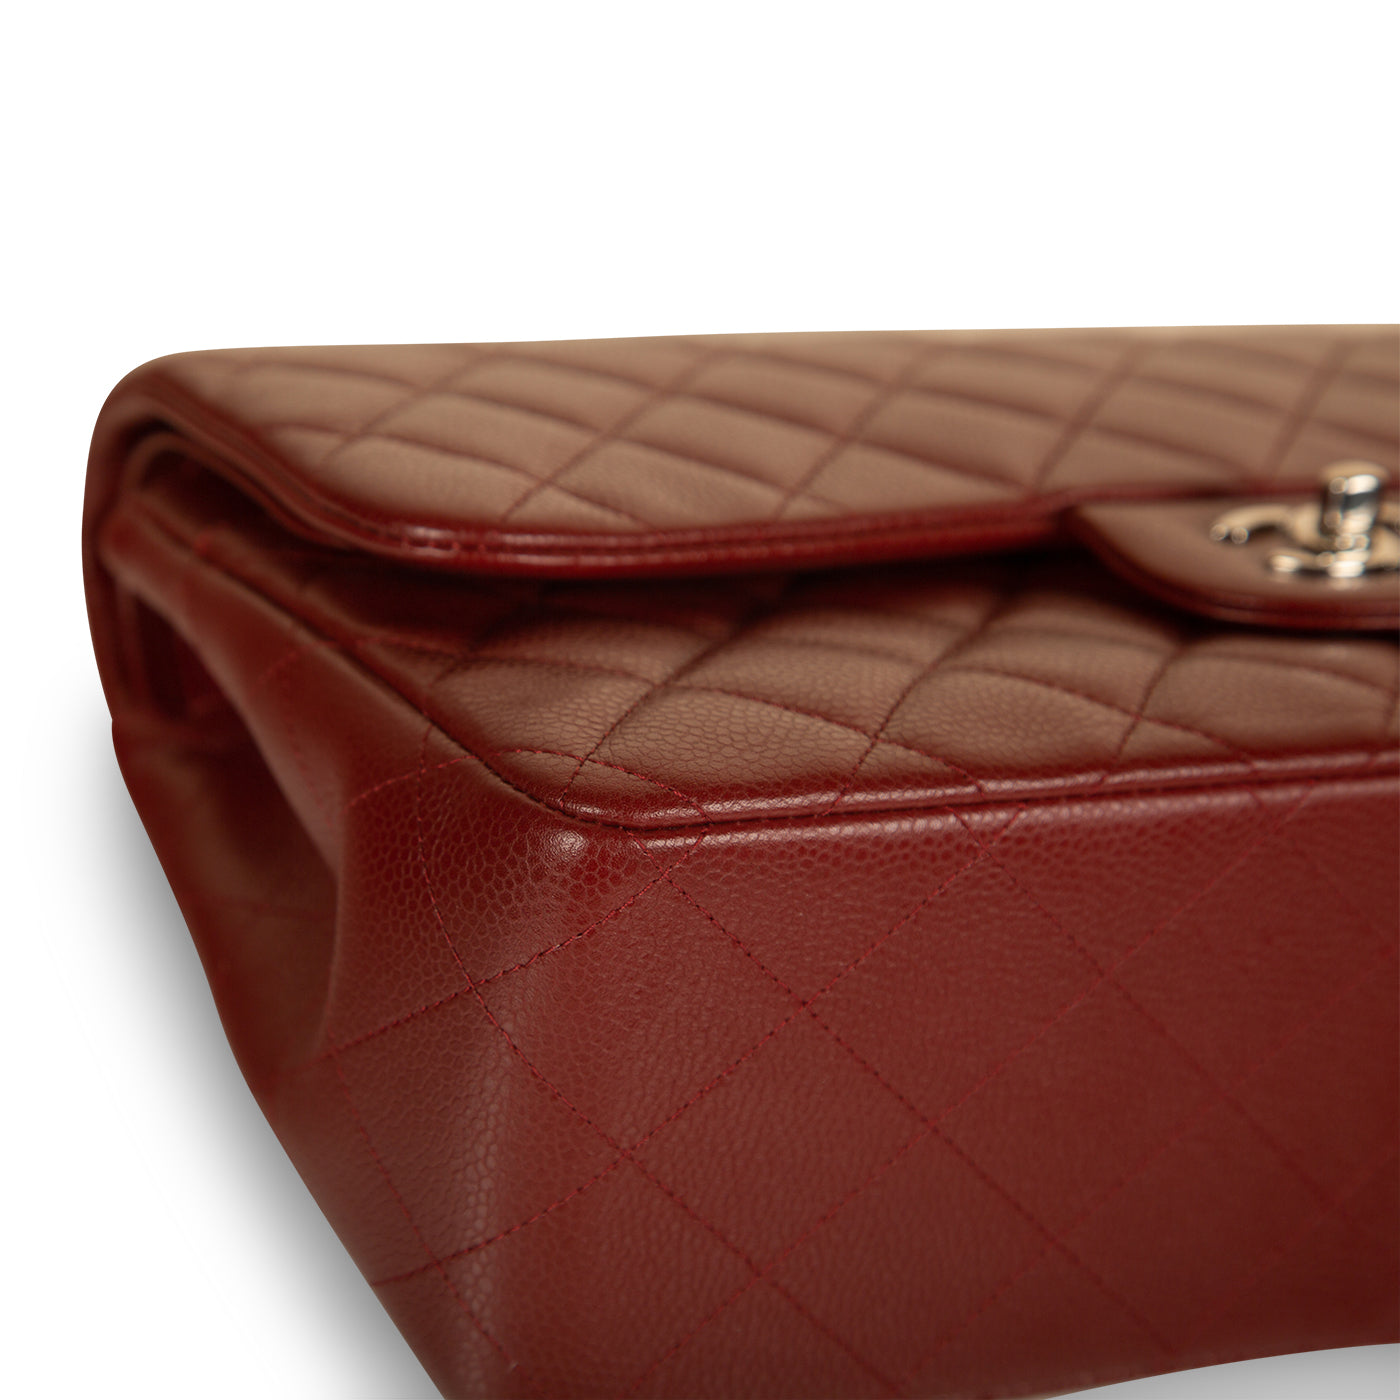 Chanel - Classic Flap Bag - Jumbo - Red Caviar